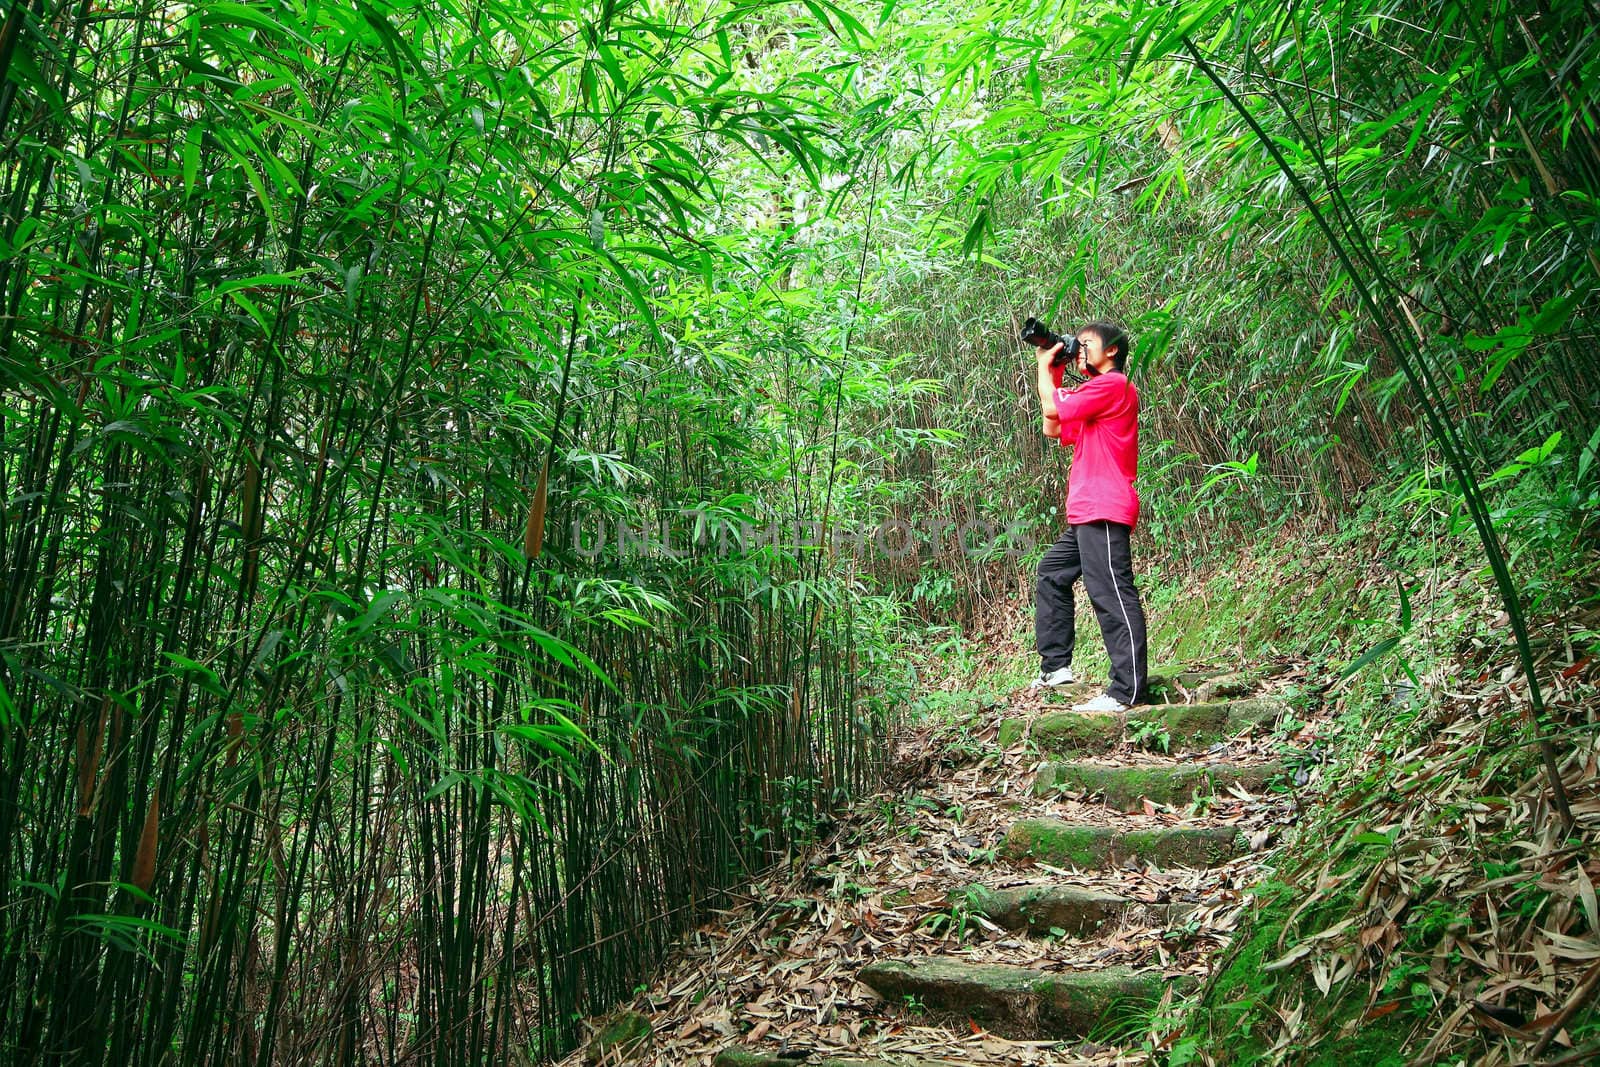 photographer taking photo in bamboo path 